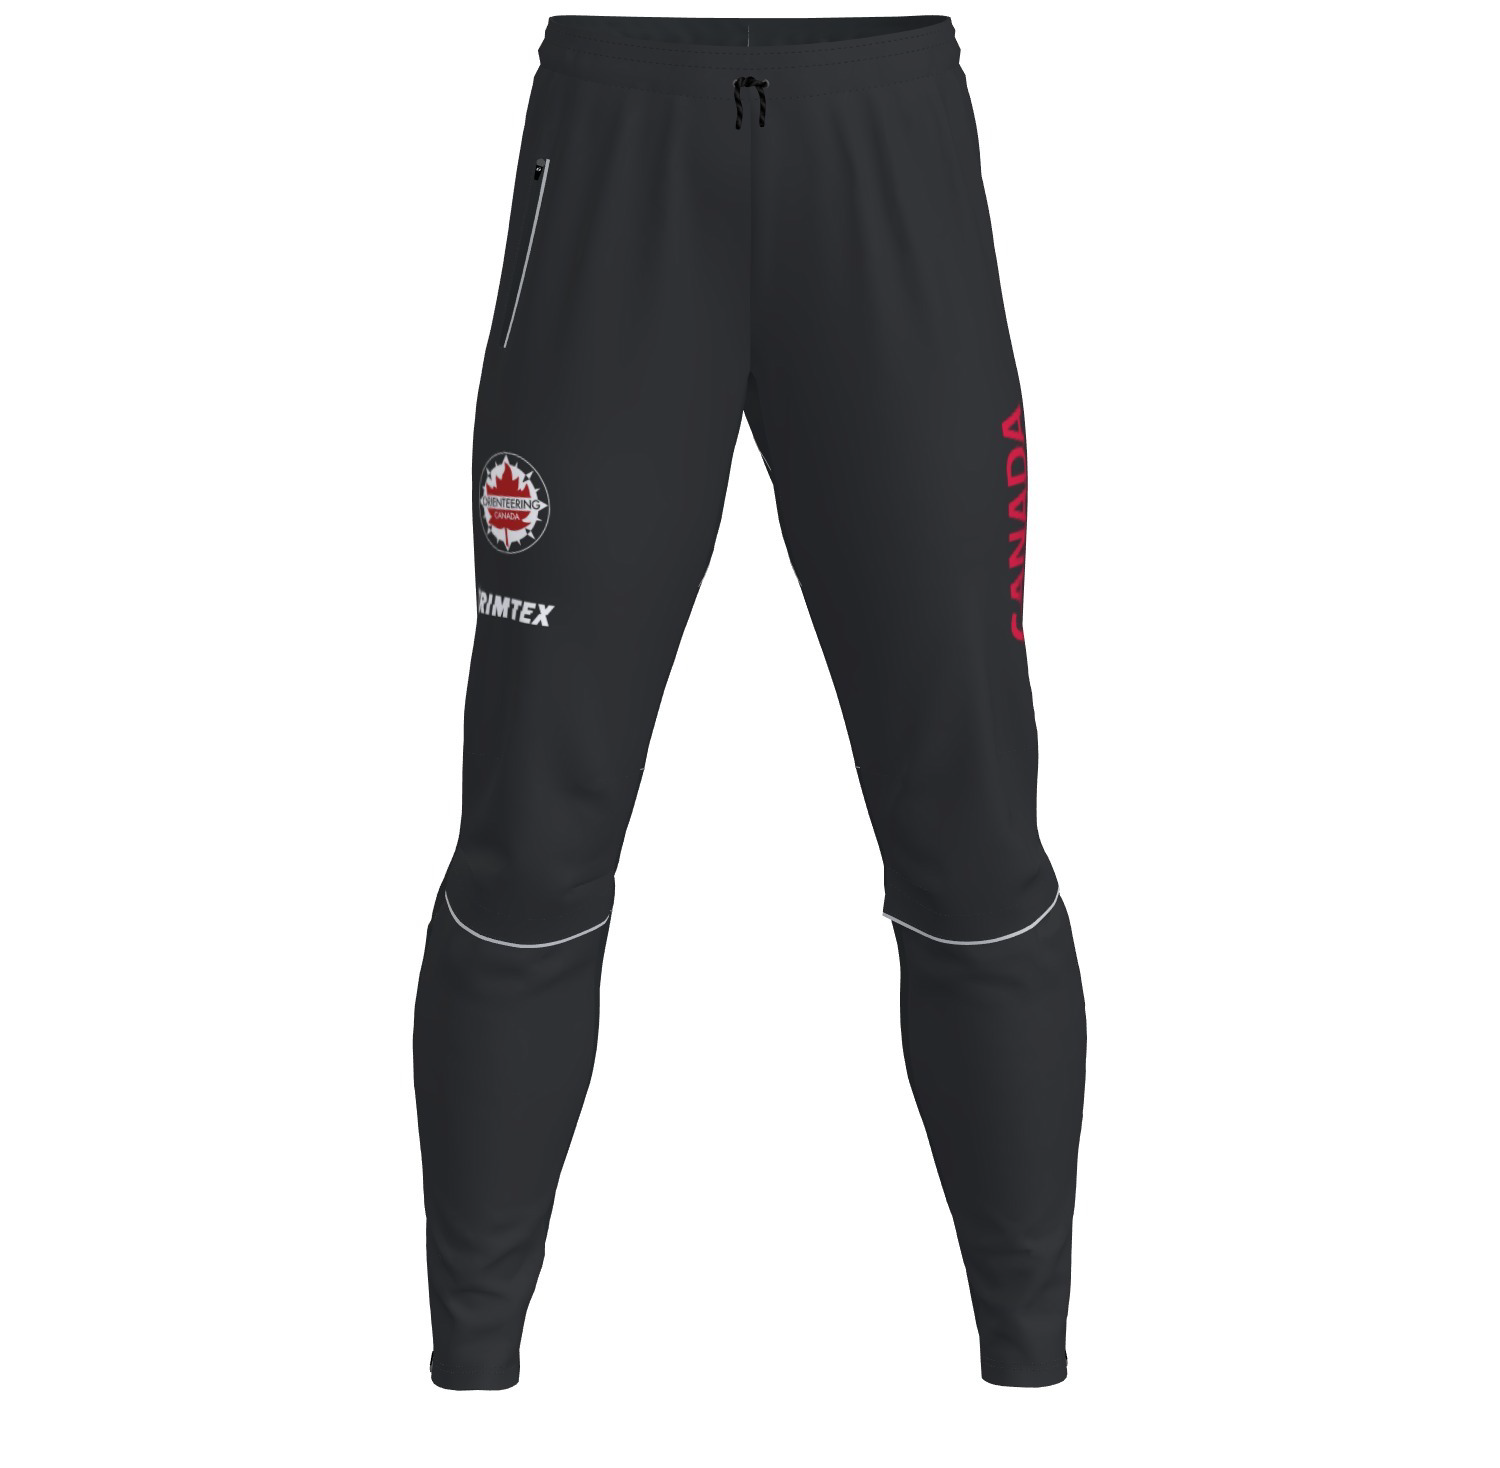  Team Canada Warm-Up Pants - 2014 design